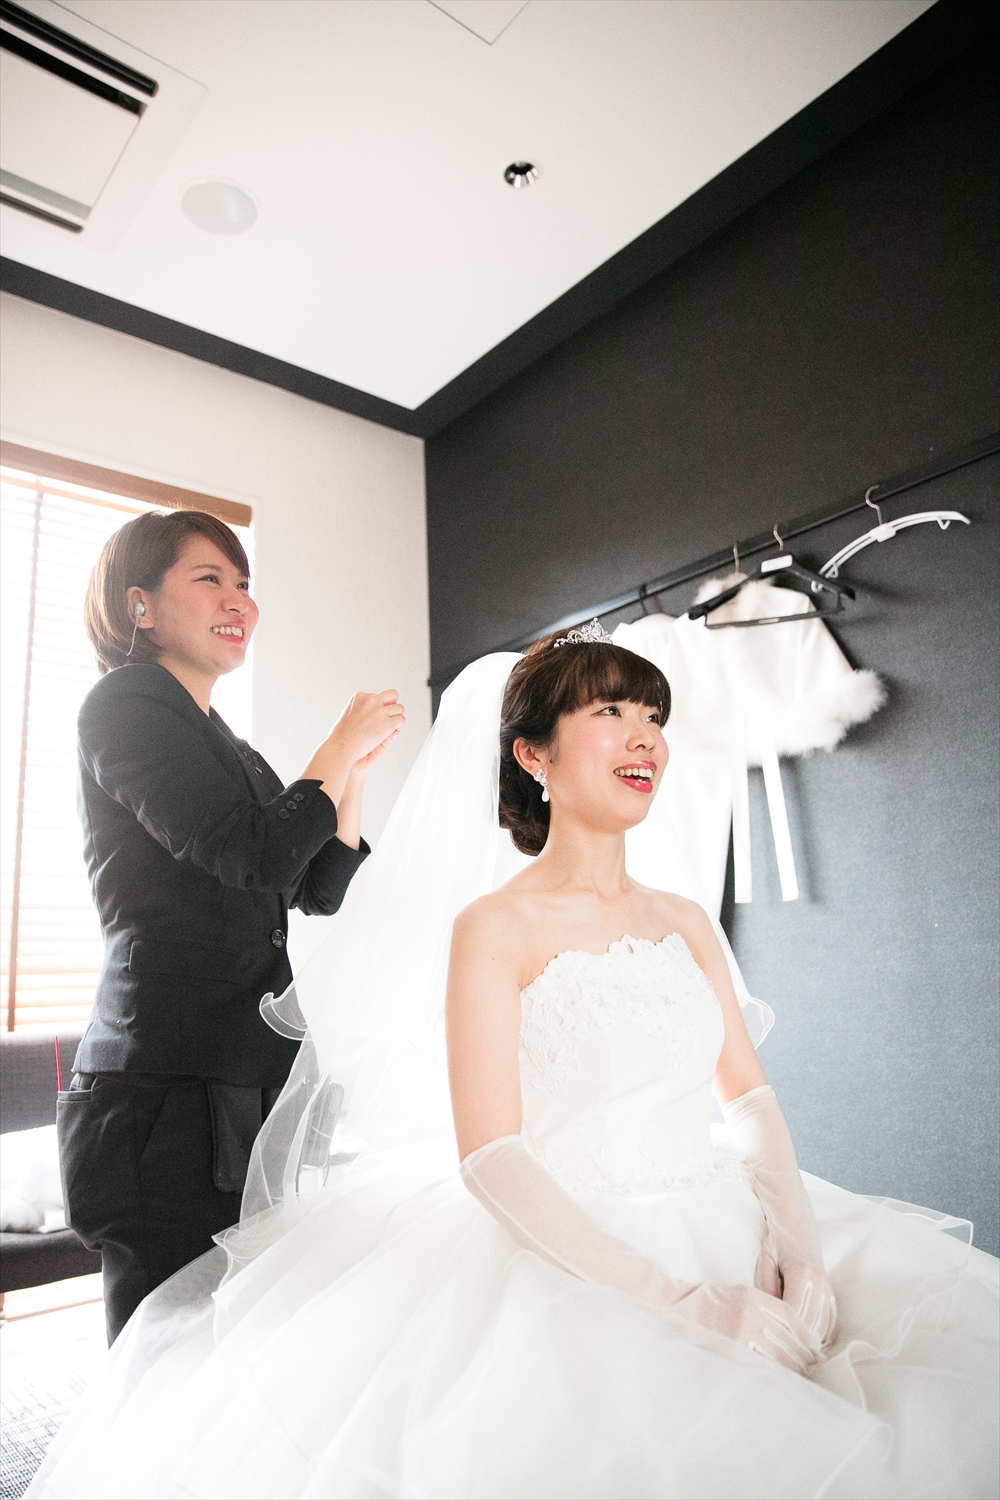 W The Bride S Suiteでの結婚式フォト ムービー 結婚式ビデオ撮影 写真撮影なら月山映像へ 大阪 神戸 京都